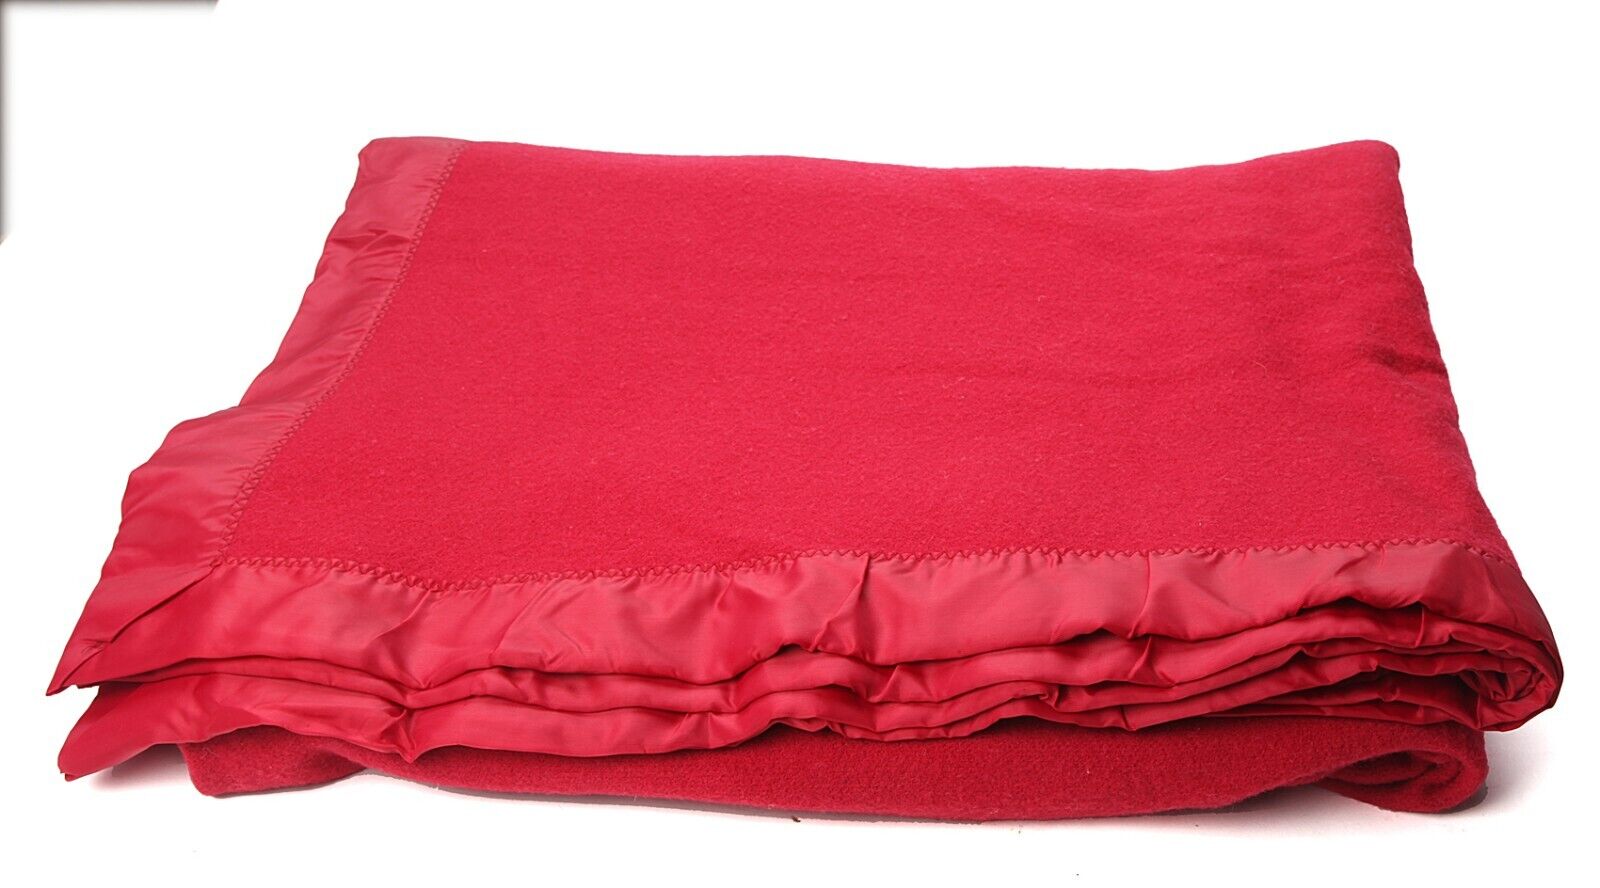 Vintage Amana Woolen Mills Since 1845 Wool Red Blanket 86x108 EUC